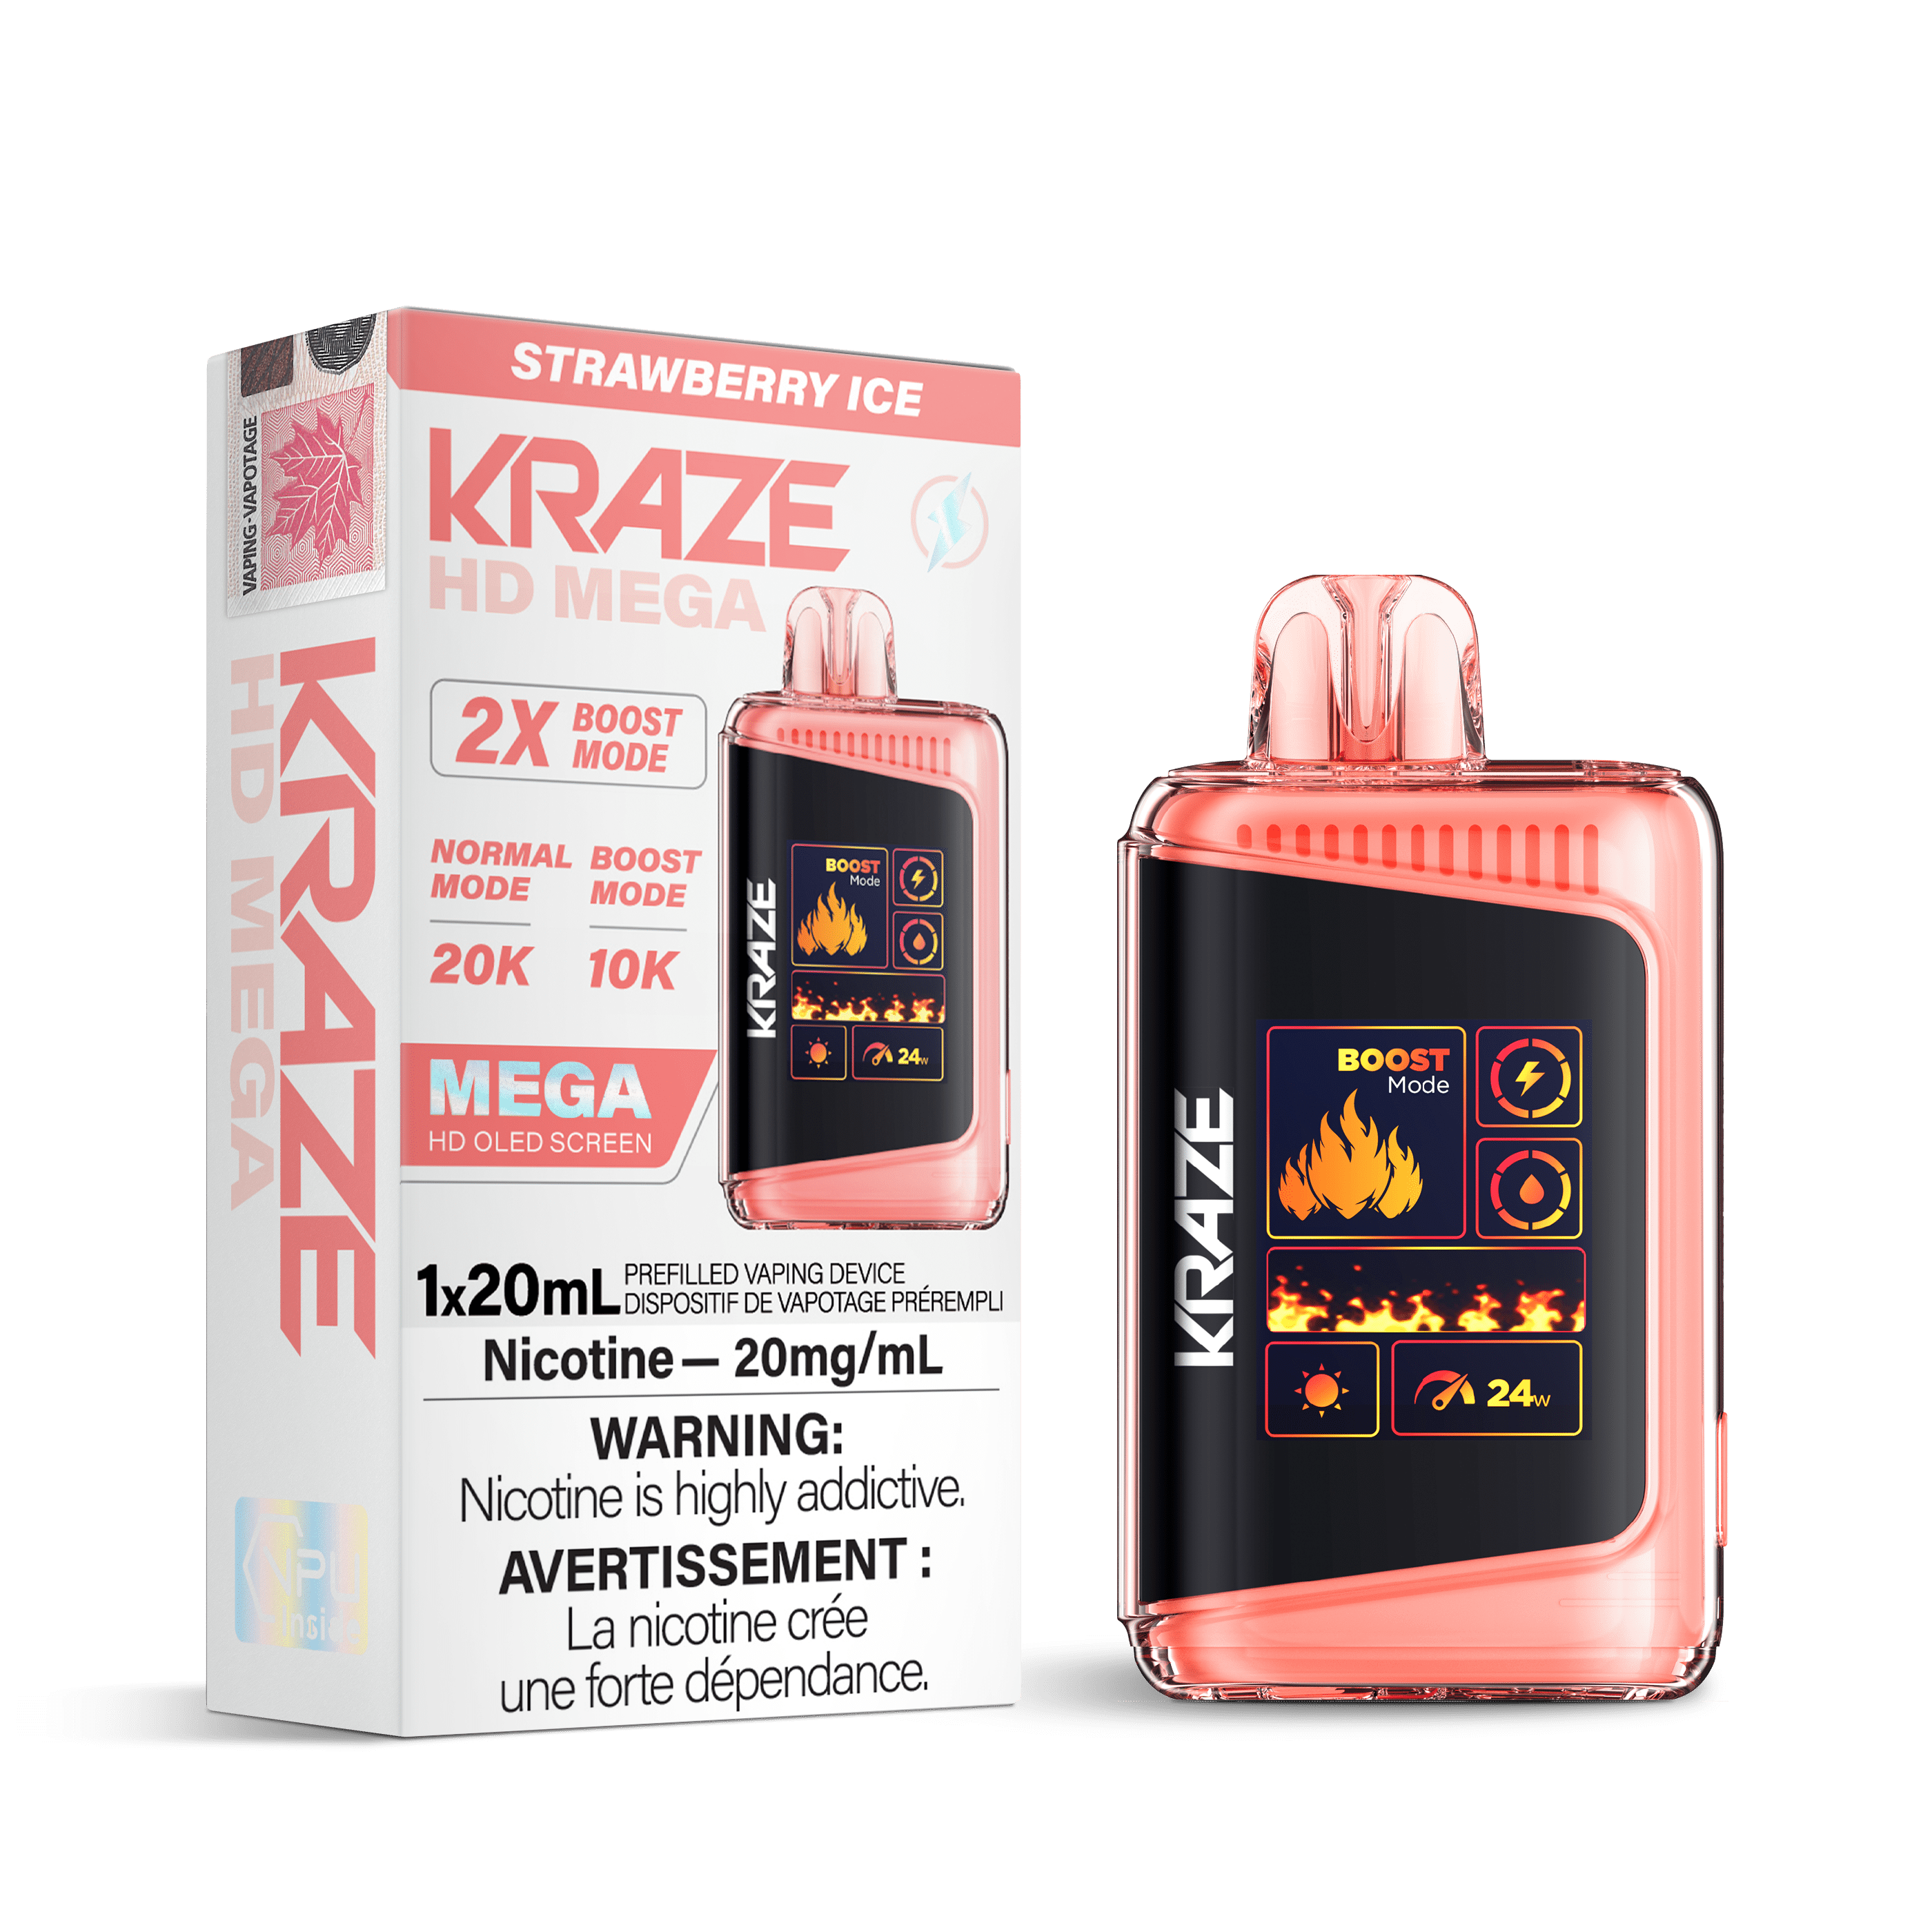 Kraze HD Mega - Strawberry Ice Disposable Vape available on Canada online vape shop